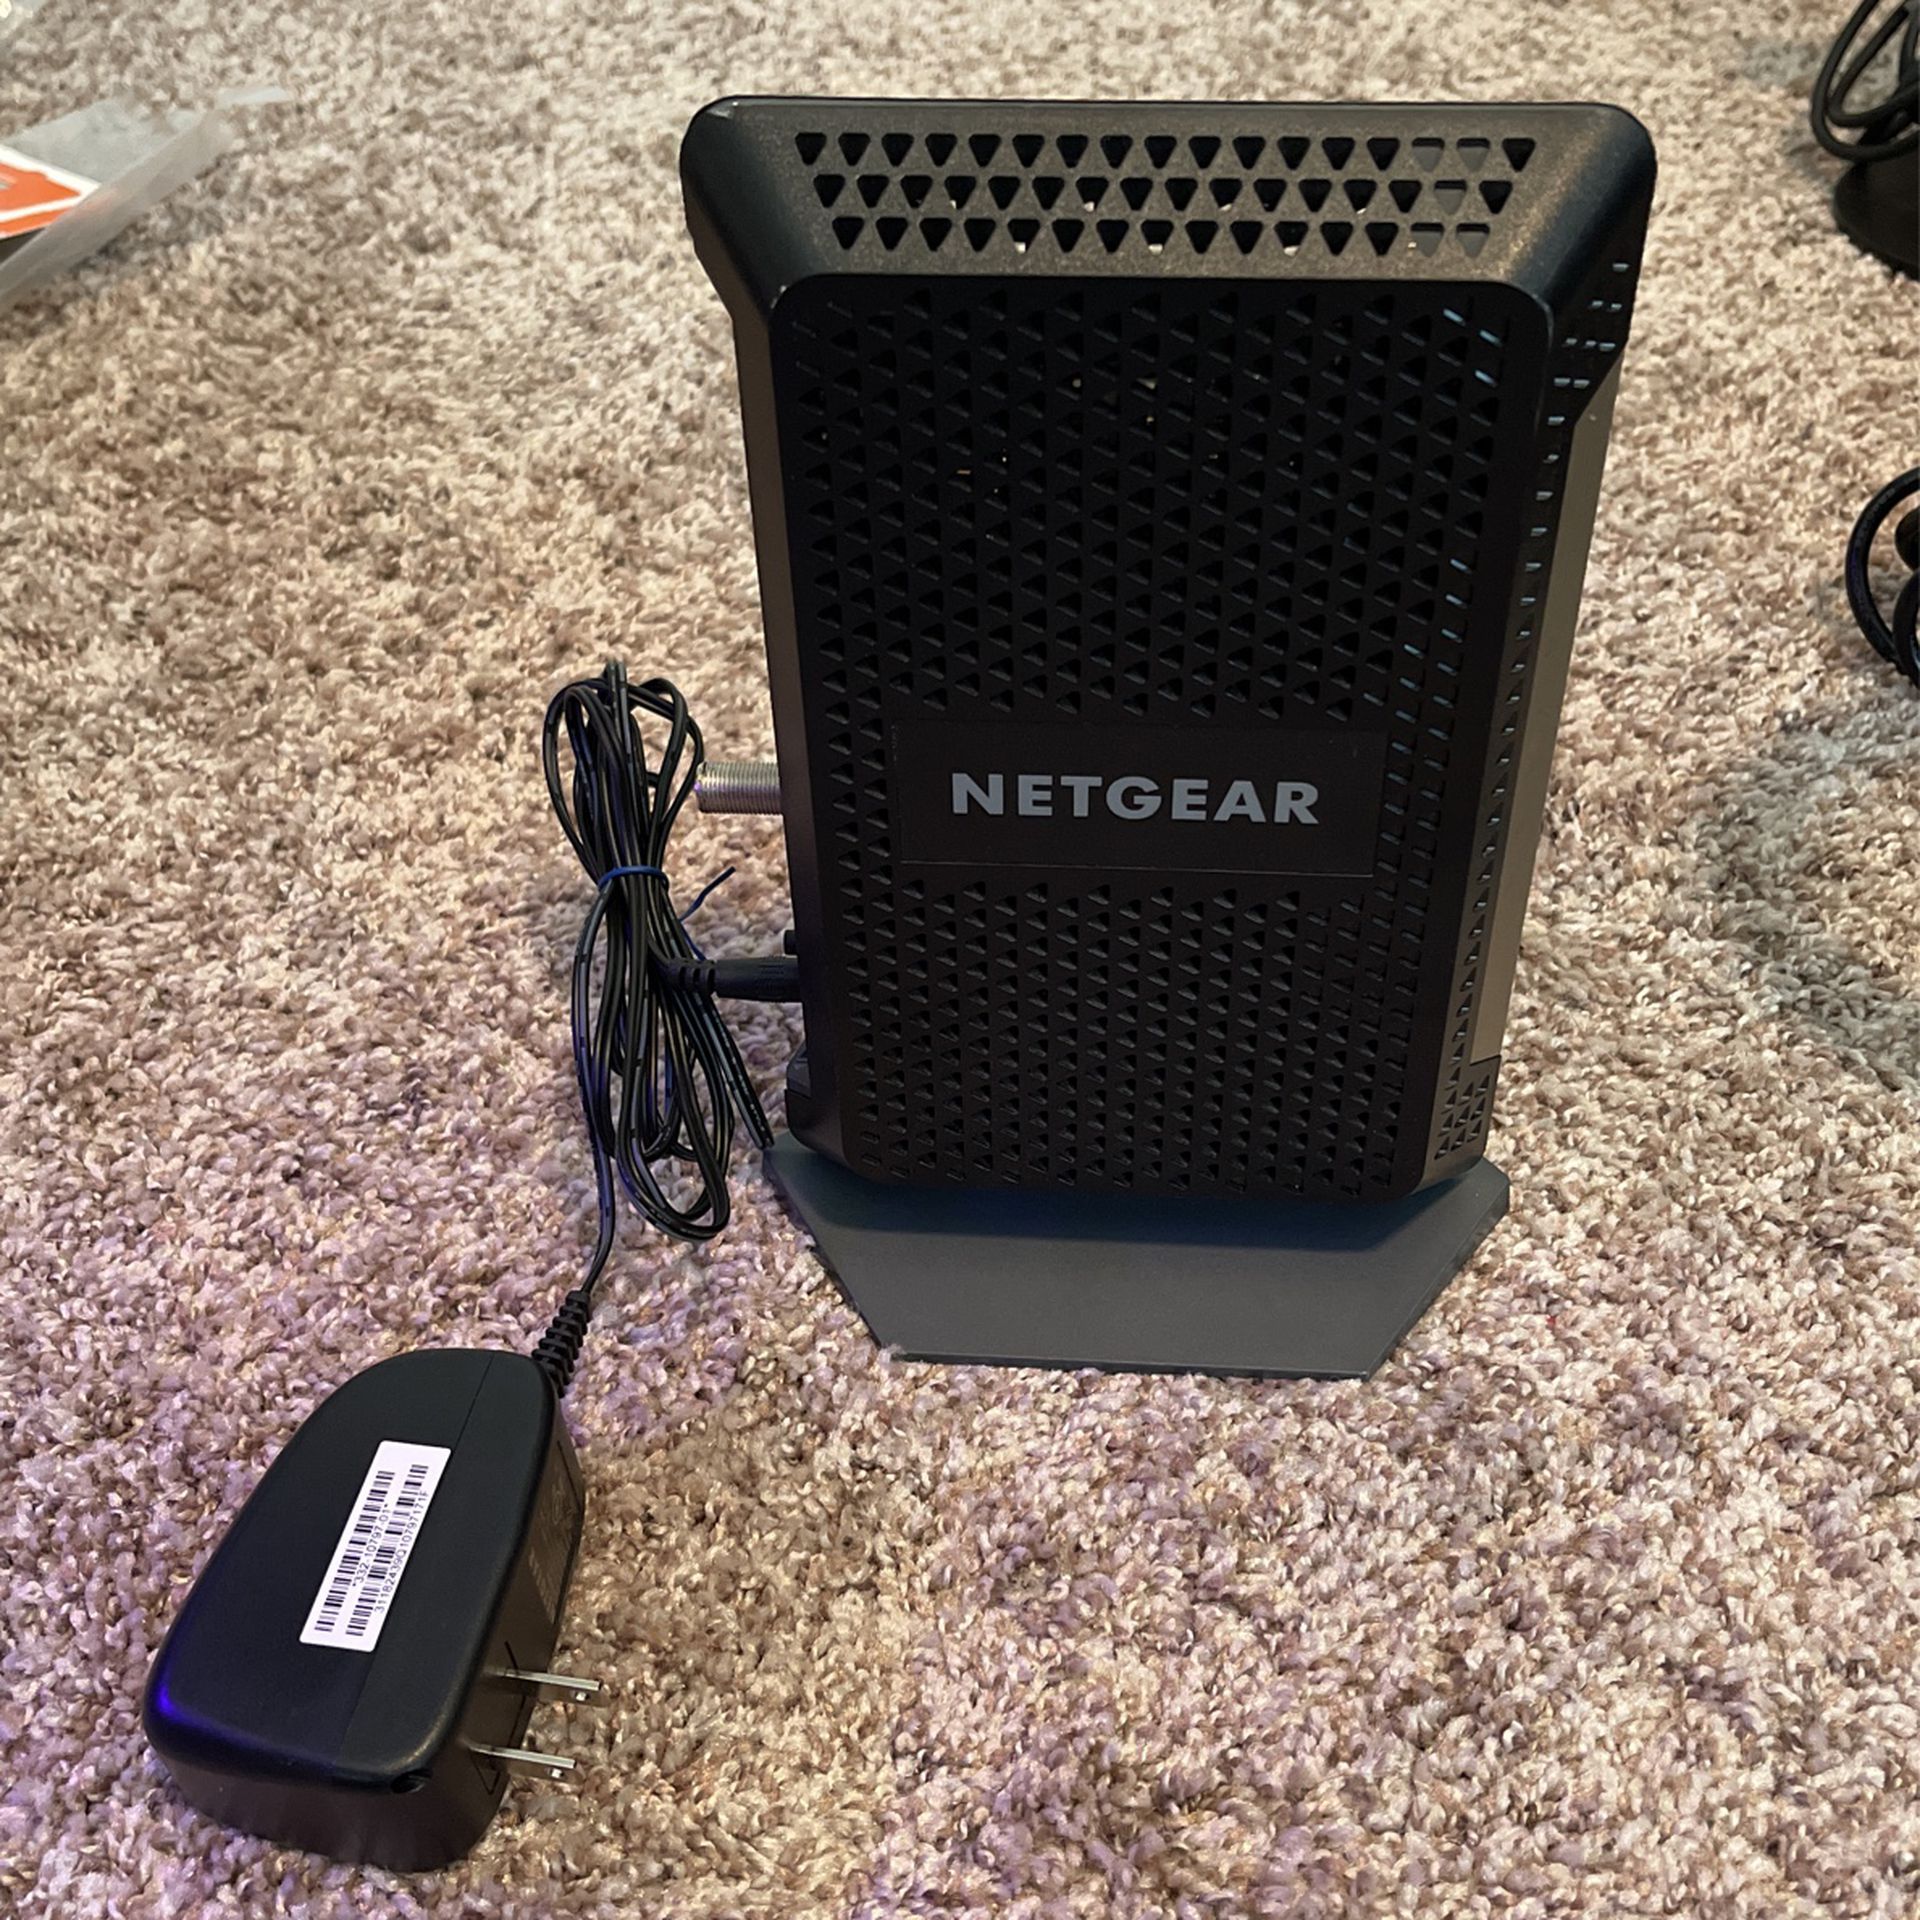 NETGEAR Gigabit Speed Cable Modem Save on your Comcast Bill!